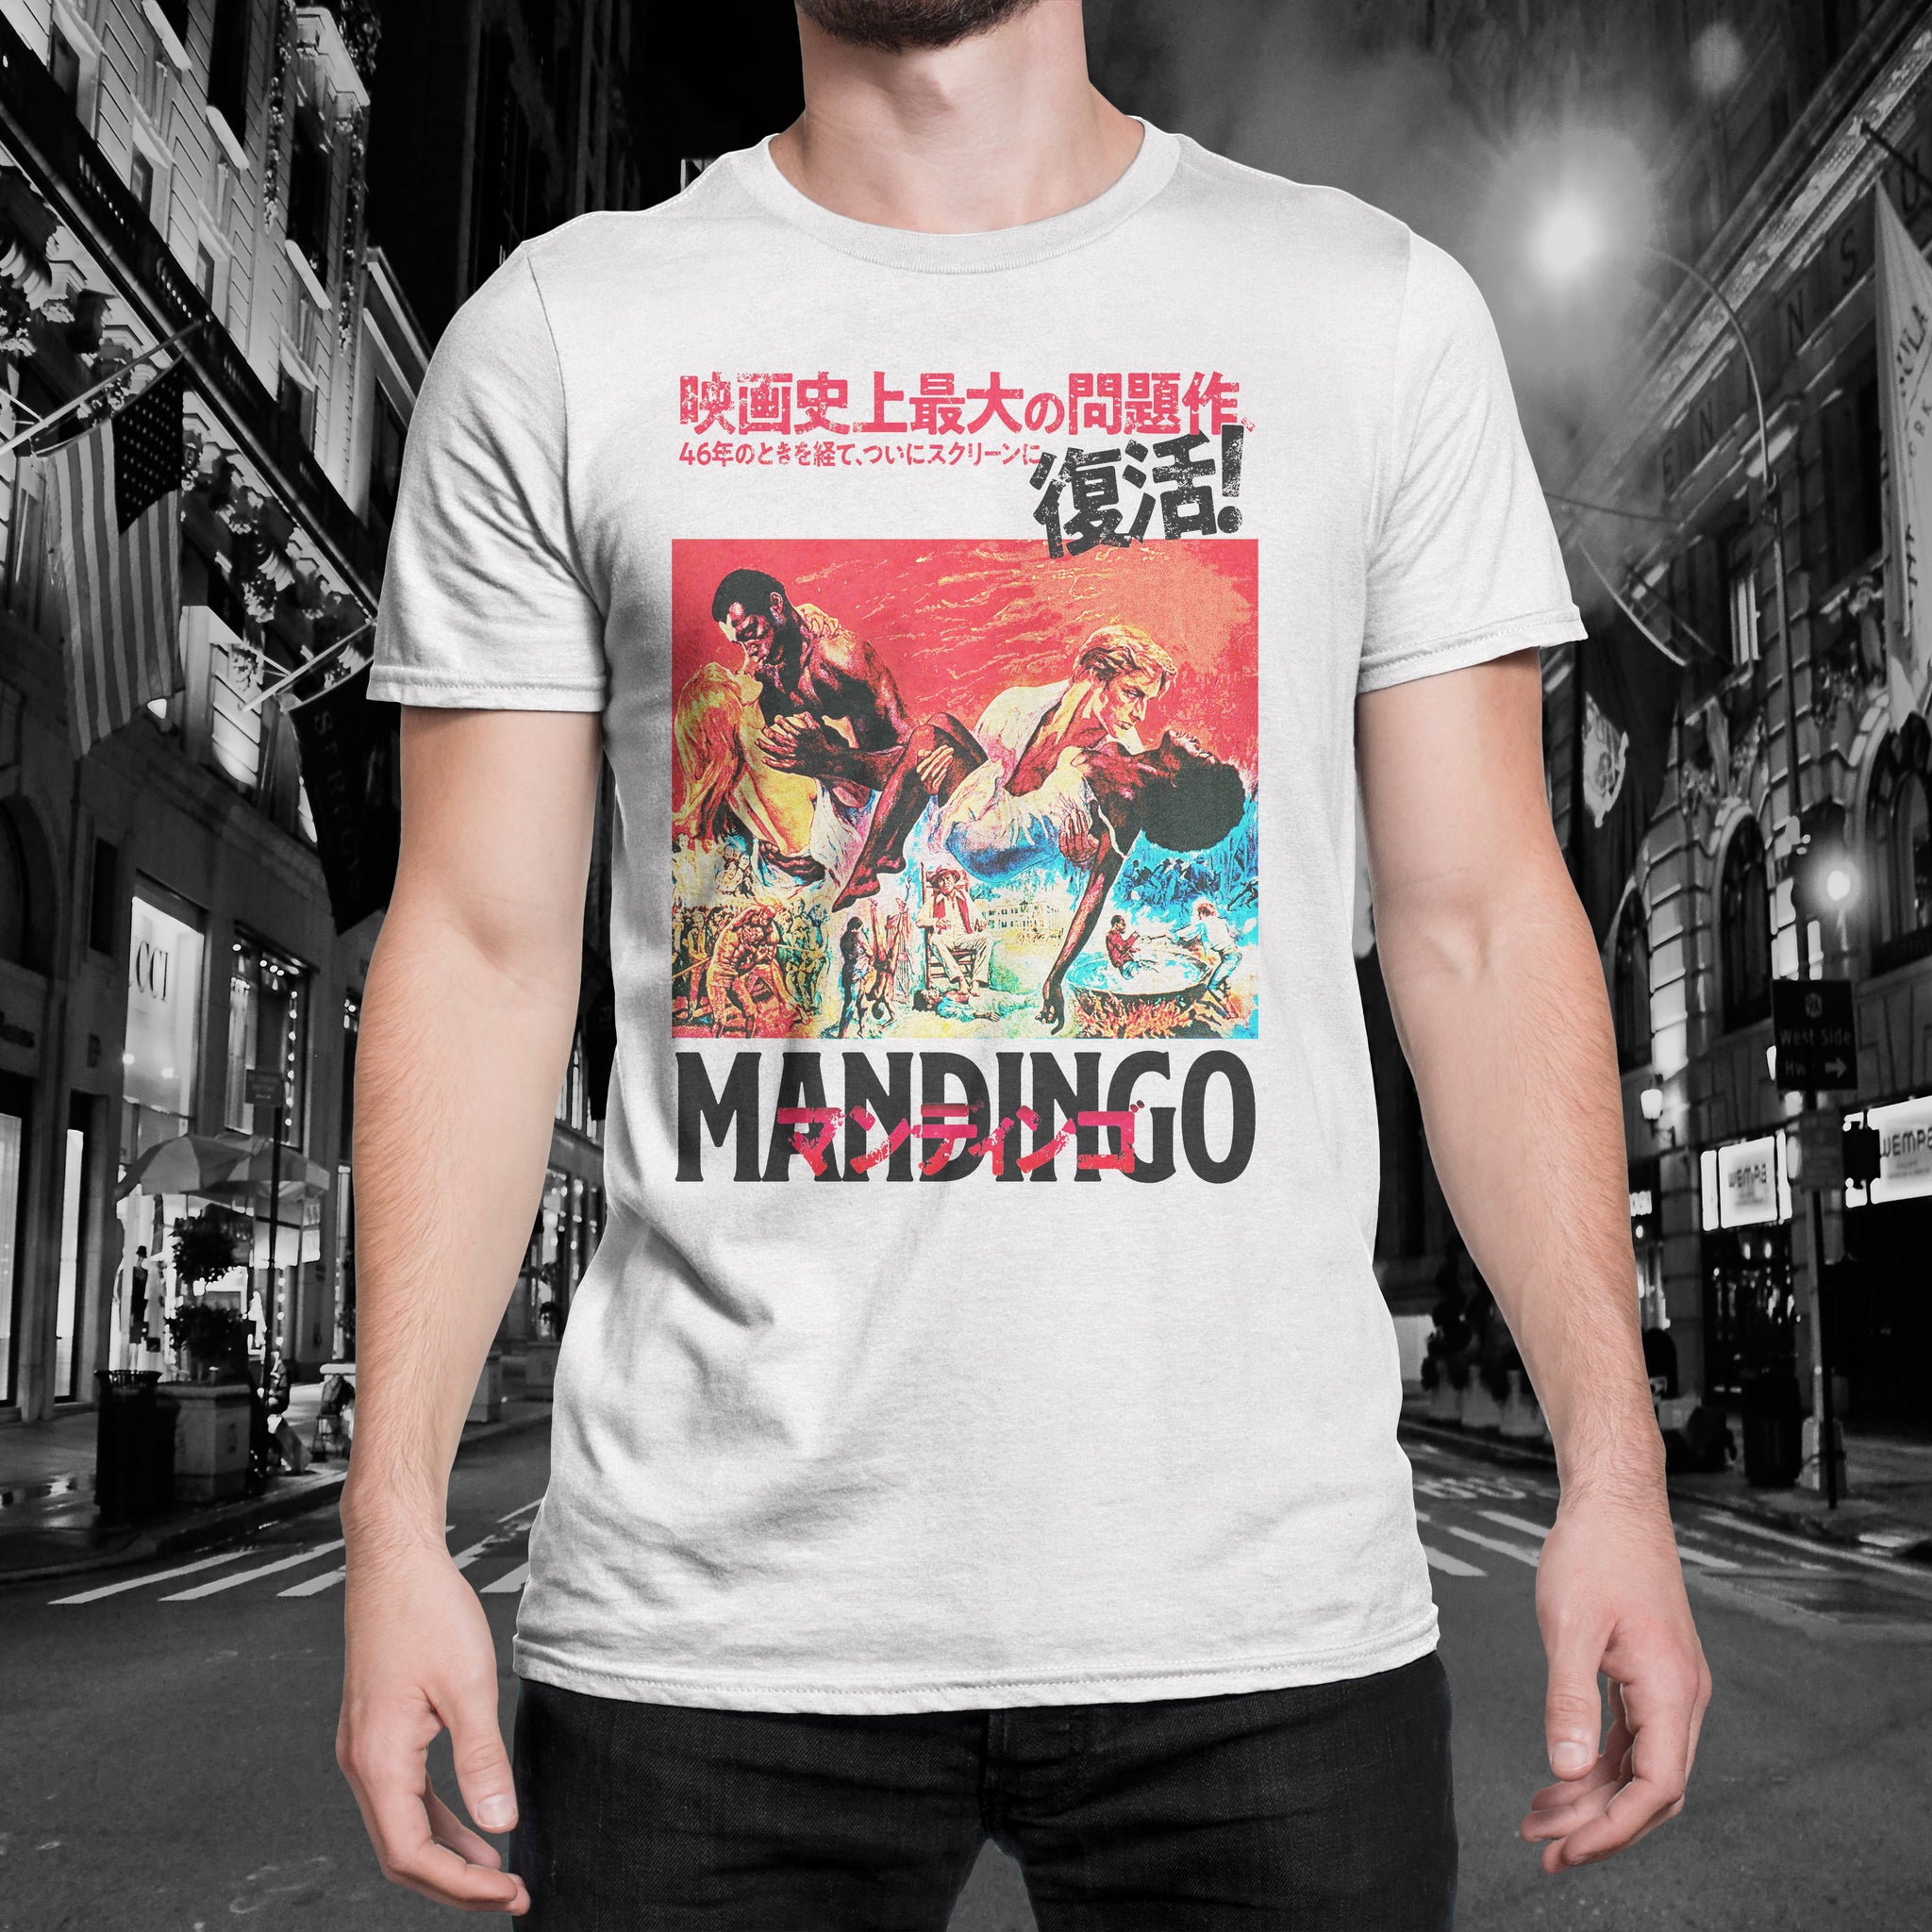 Mandingo "Japan" Tee